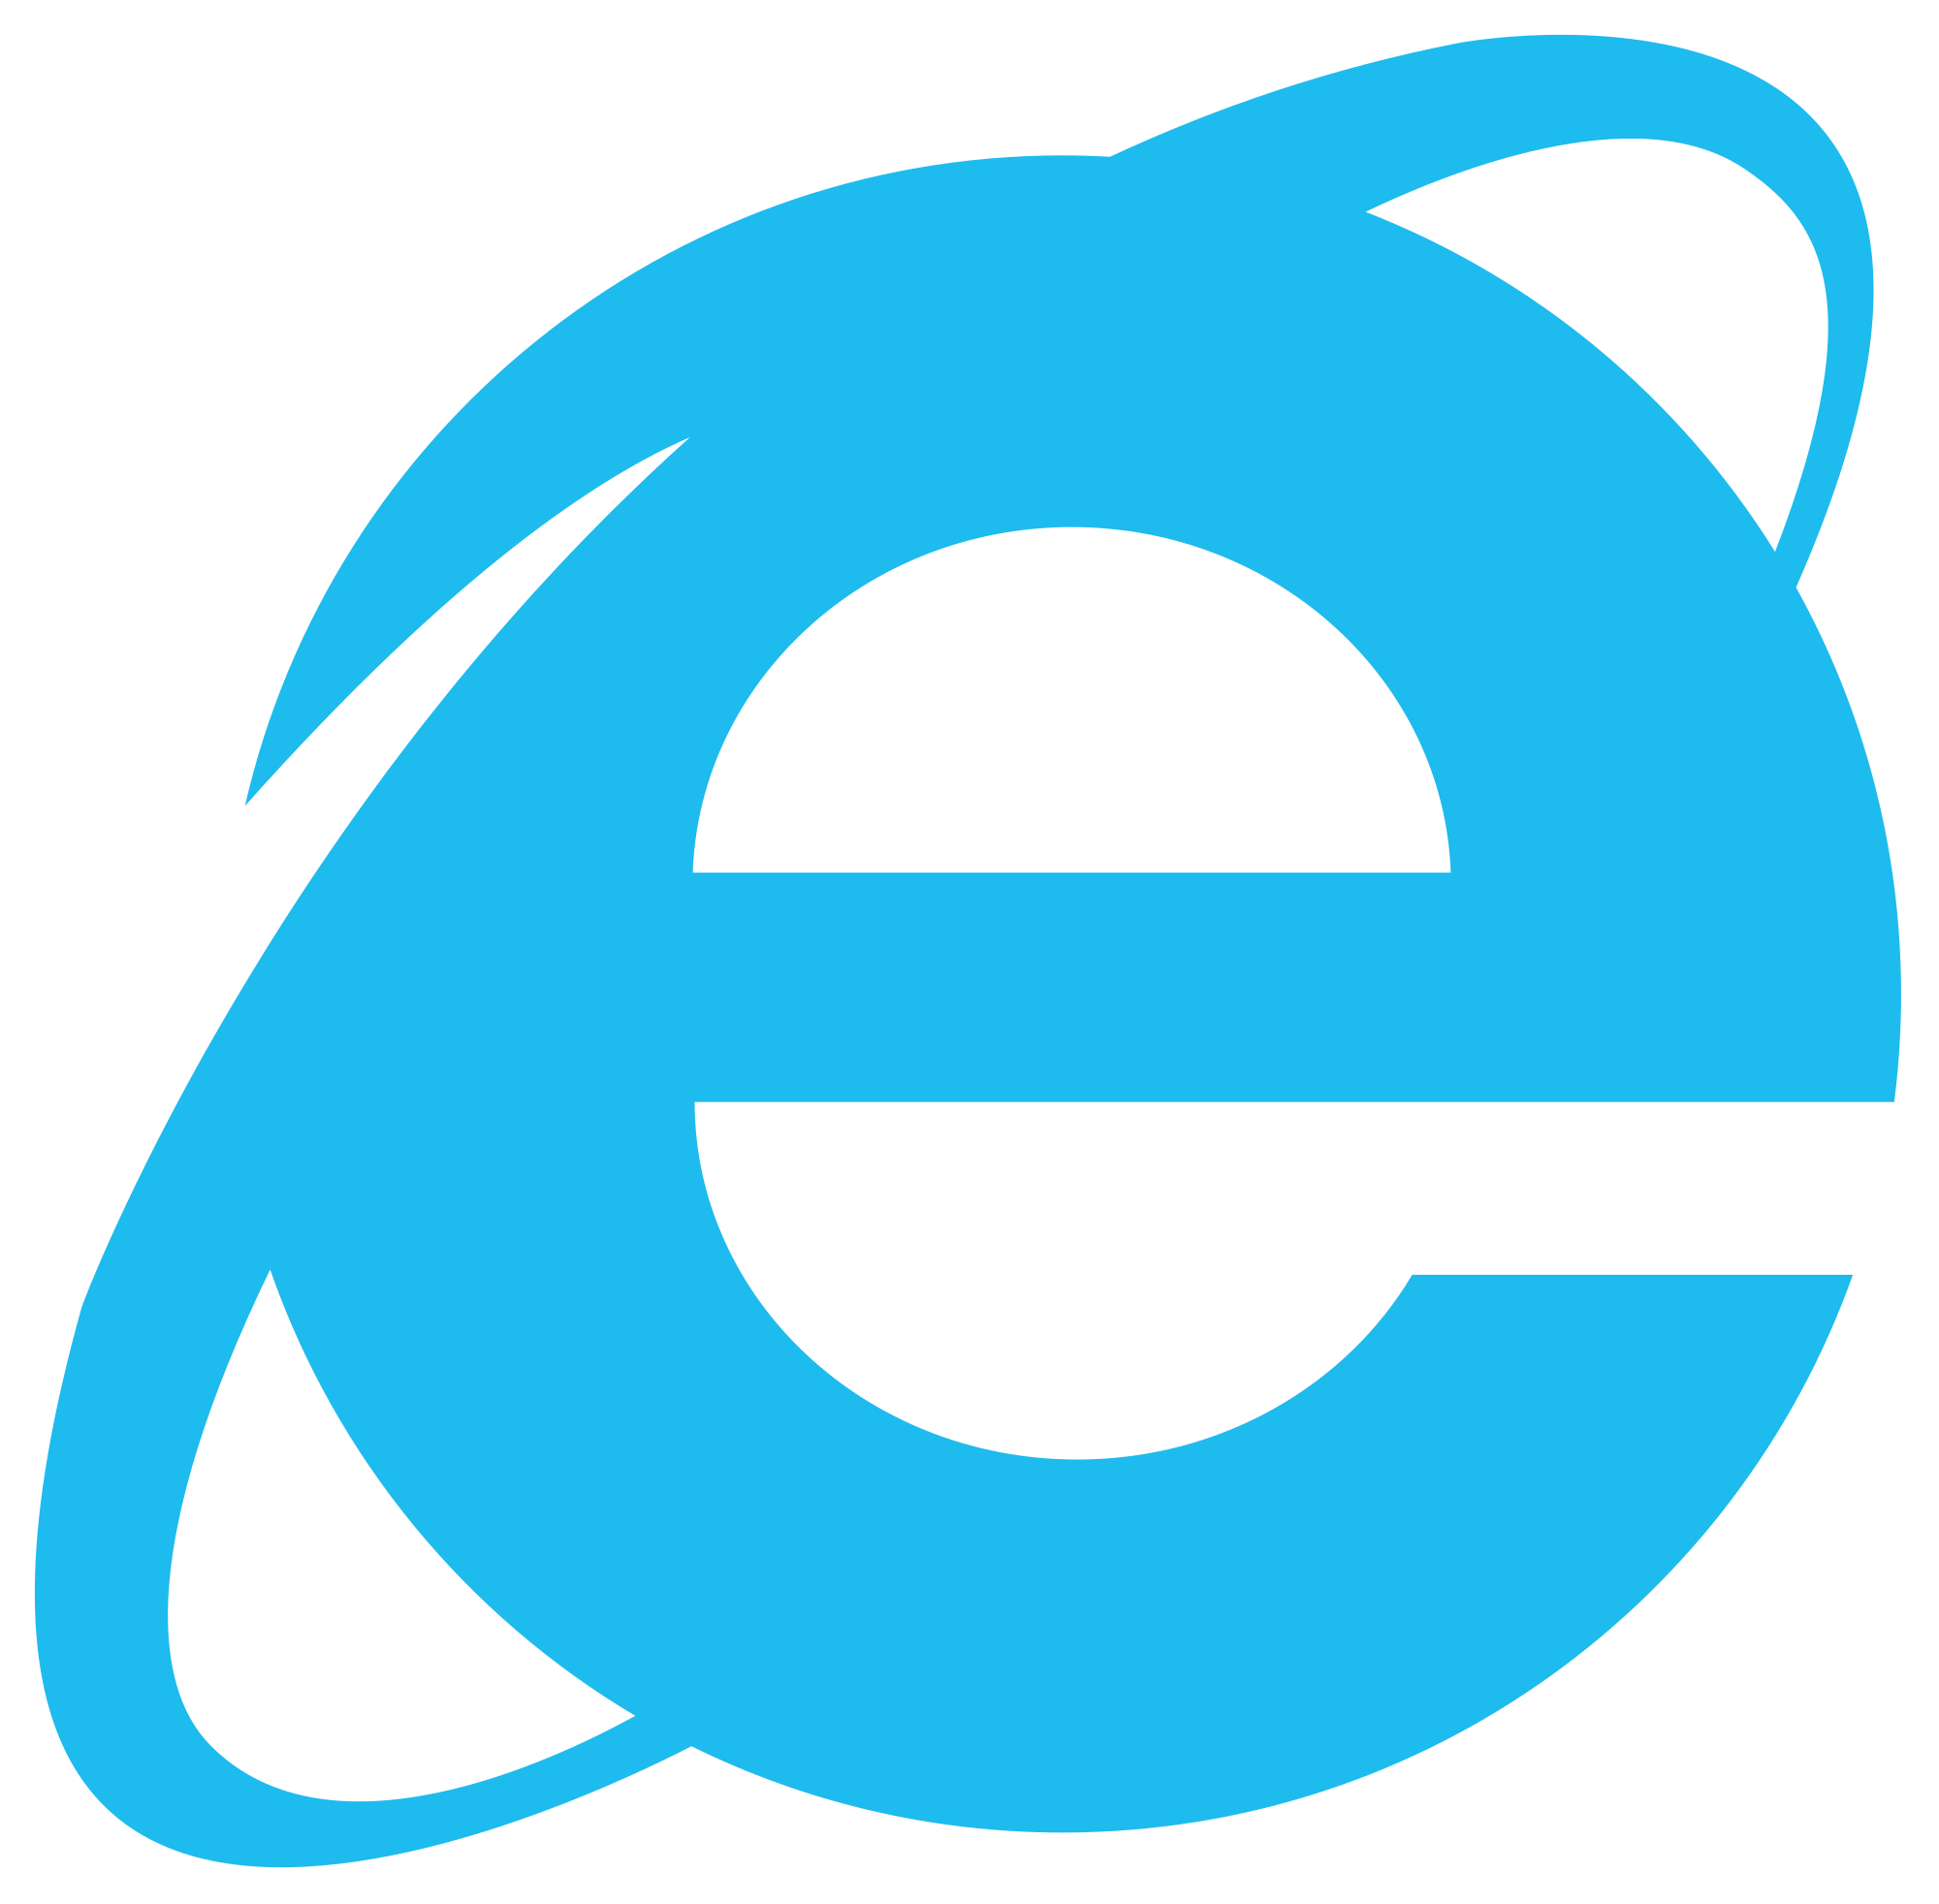 Internet Explorer 1 Logo - File:Internet Explorer 10+11 logo.svg - Wikimedia Commons